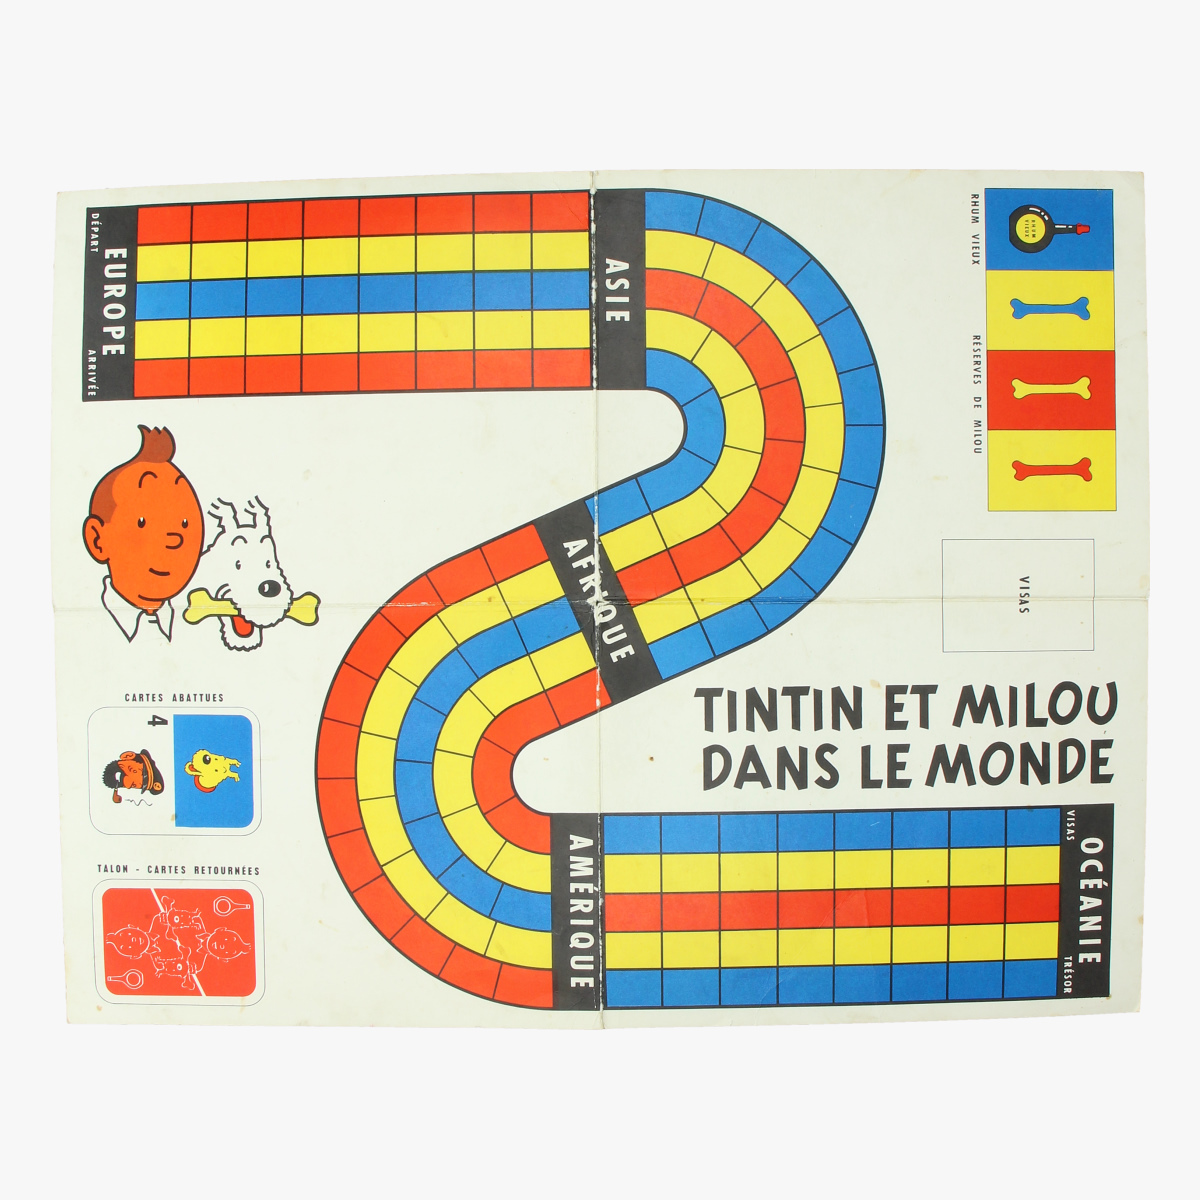 Afbeeldingen van oude bordspel kuifje '' tintin et milou dans le monde " made in france